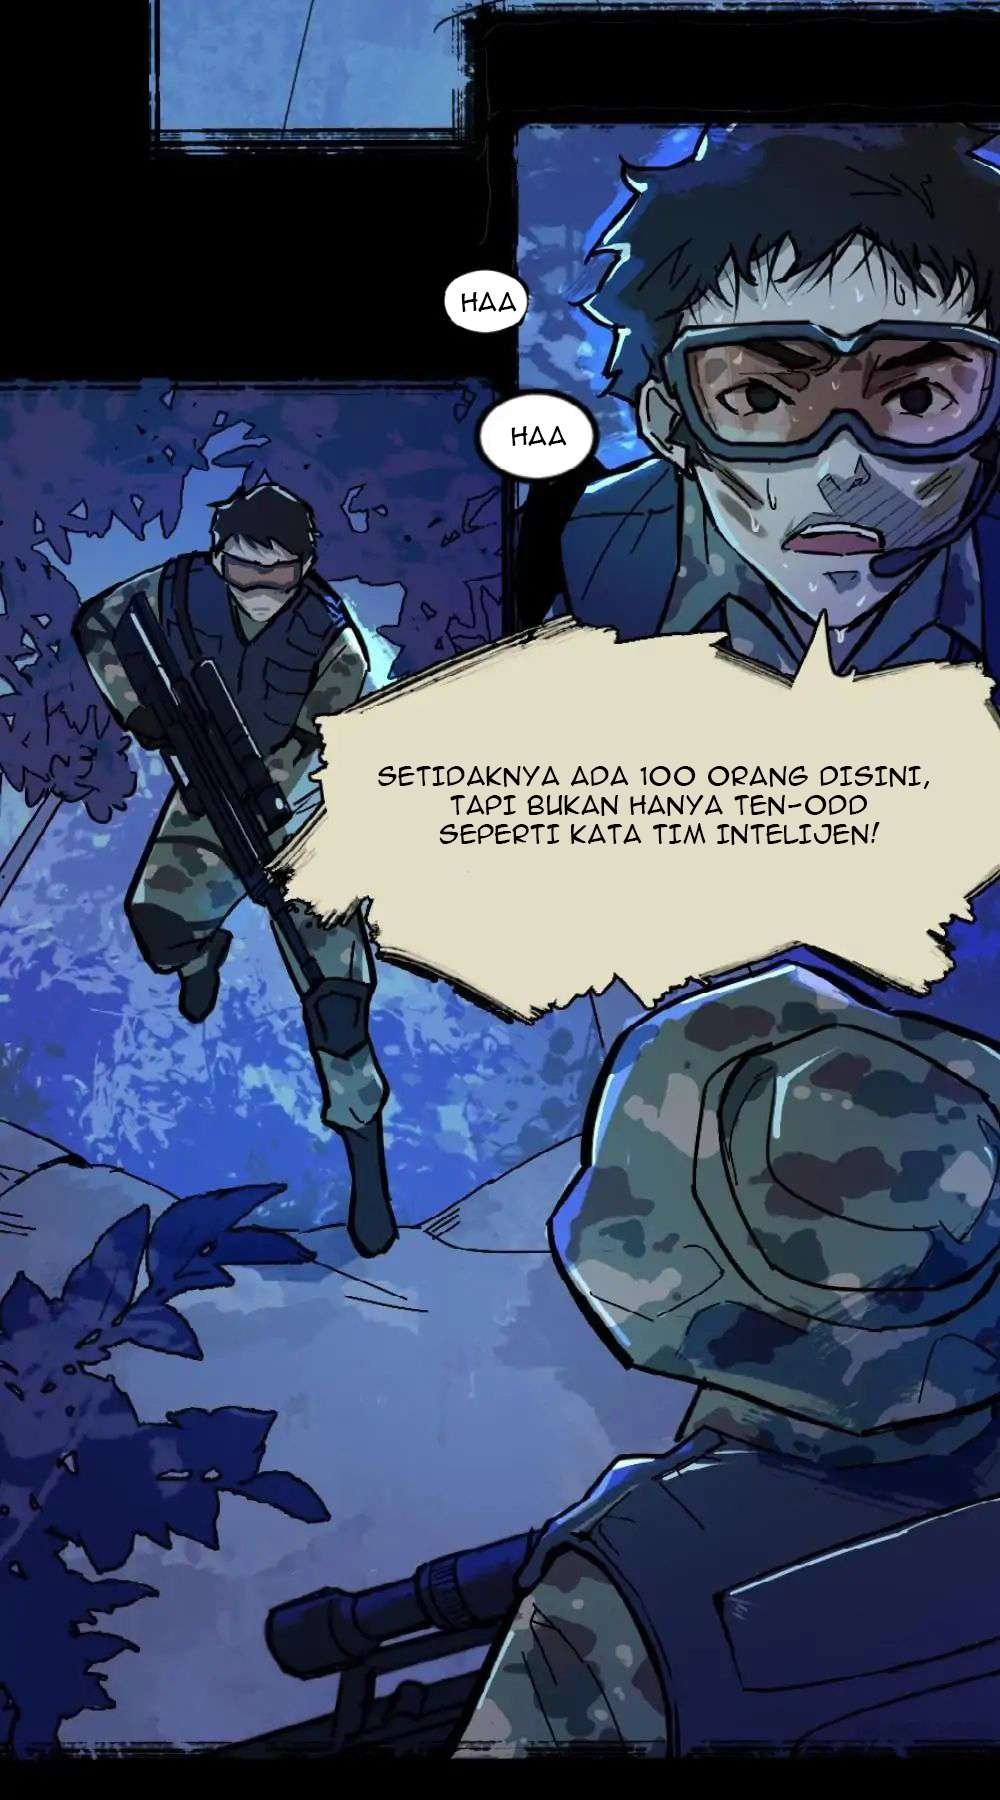 Baca The Great Soldier Chapter 1  - GudangKomik